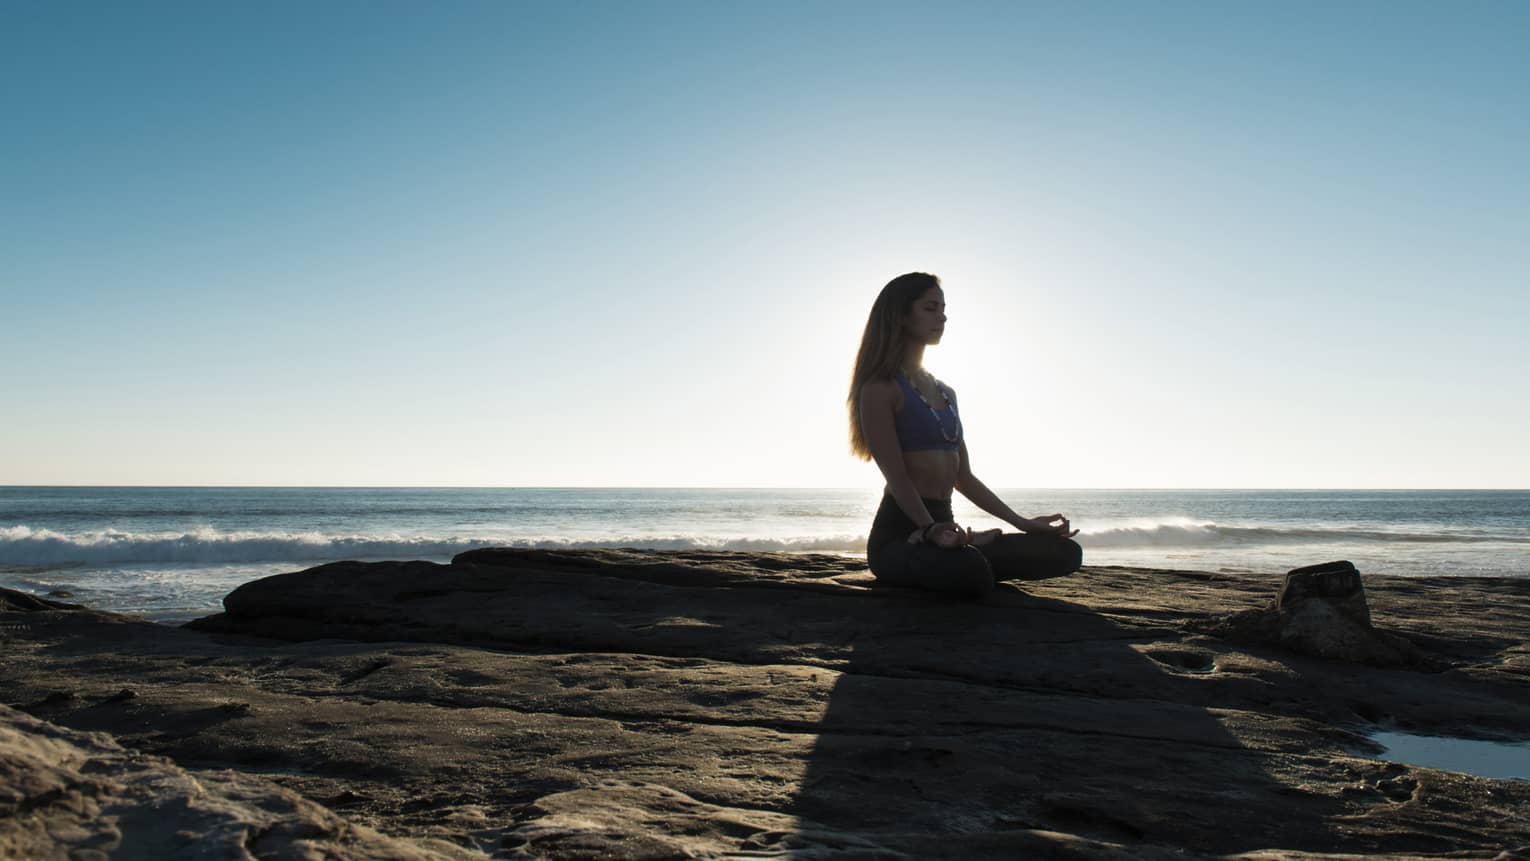 Silhouette of woman sitting cross-legged, meditating on rock by ocean